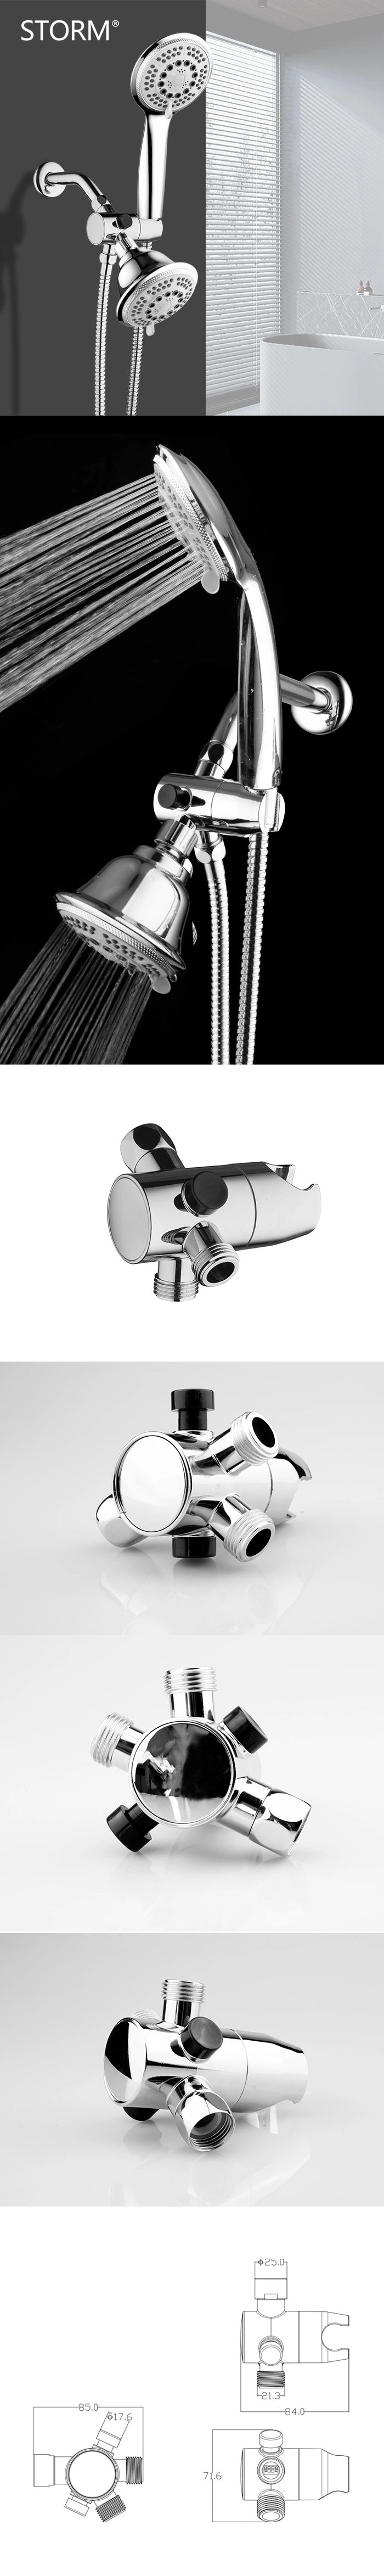 3 Way ABS Adjustable Hand Shower Water Diverter with Bracket /Holder